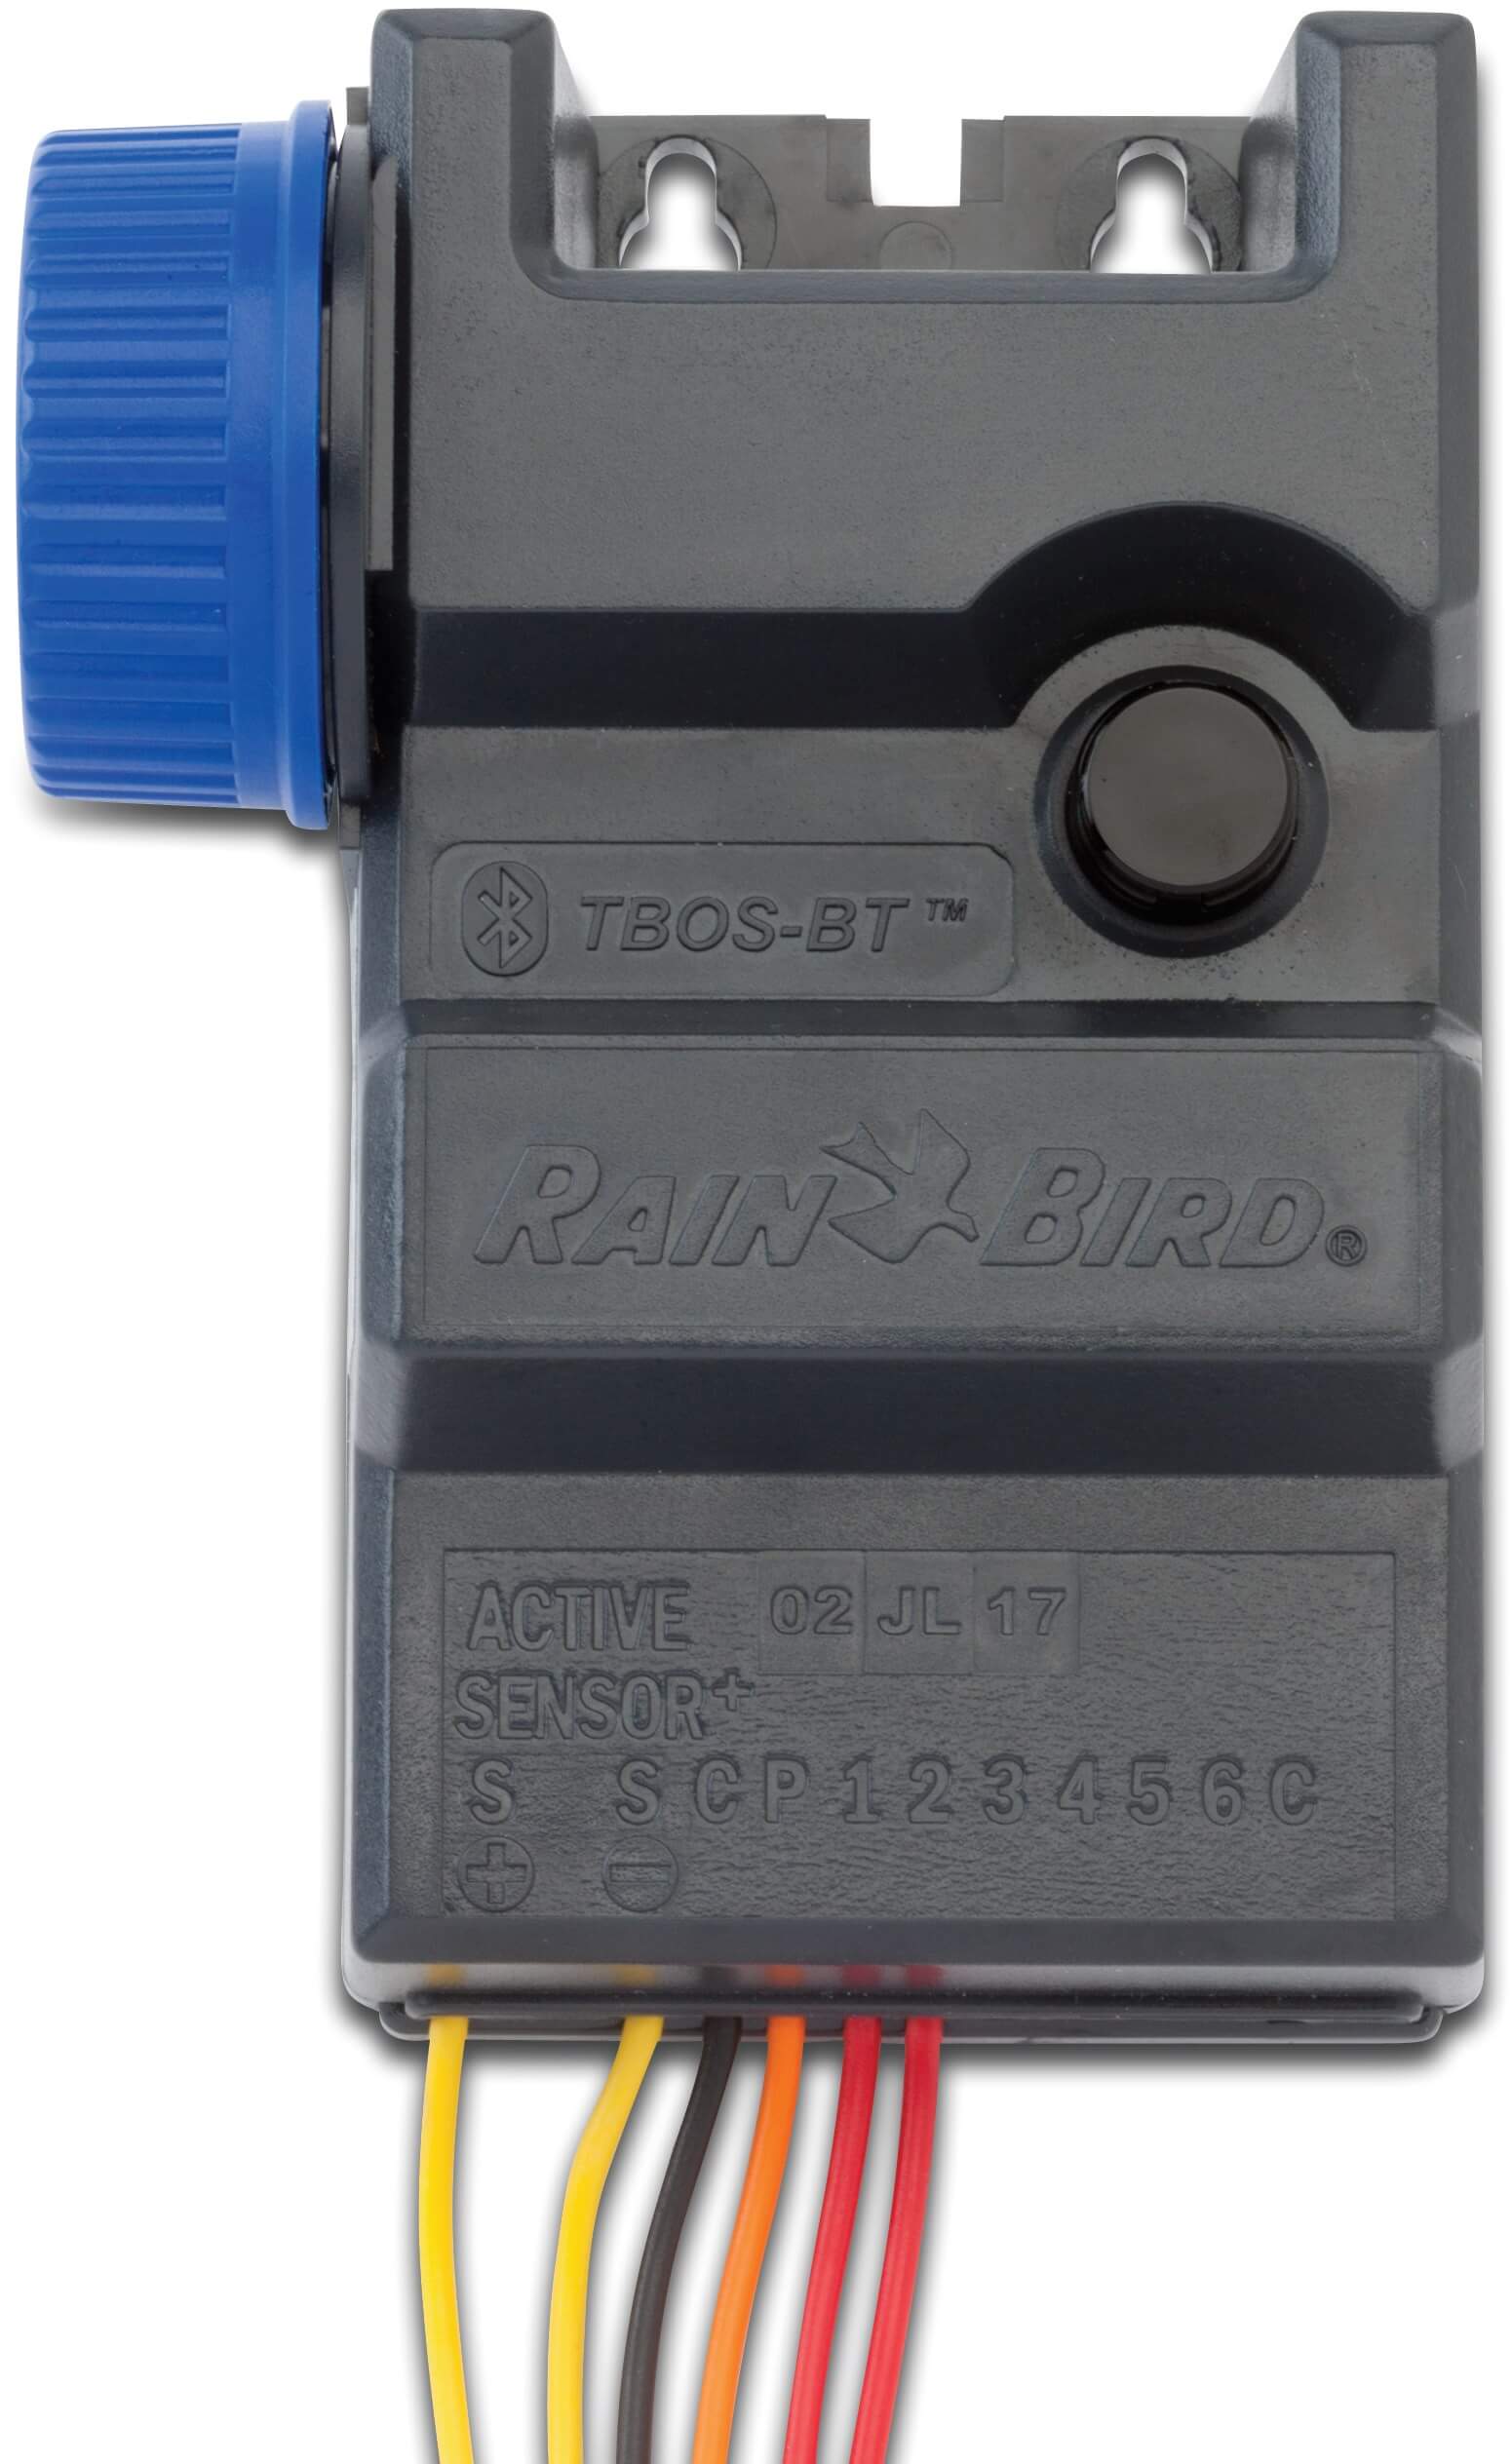 Rain Bird Bluetooth kontrolmodul 9V type TBOSBT1 1 stationer